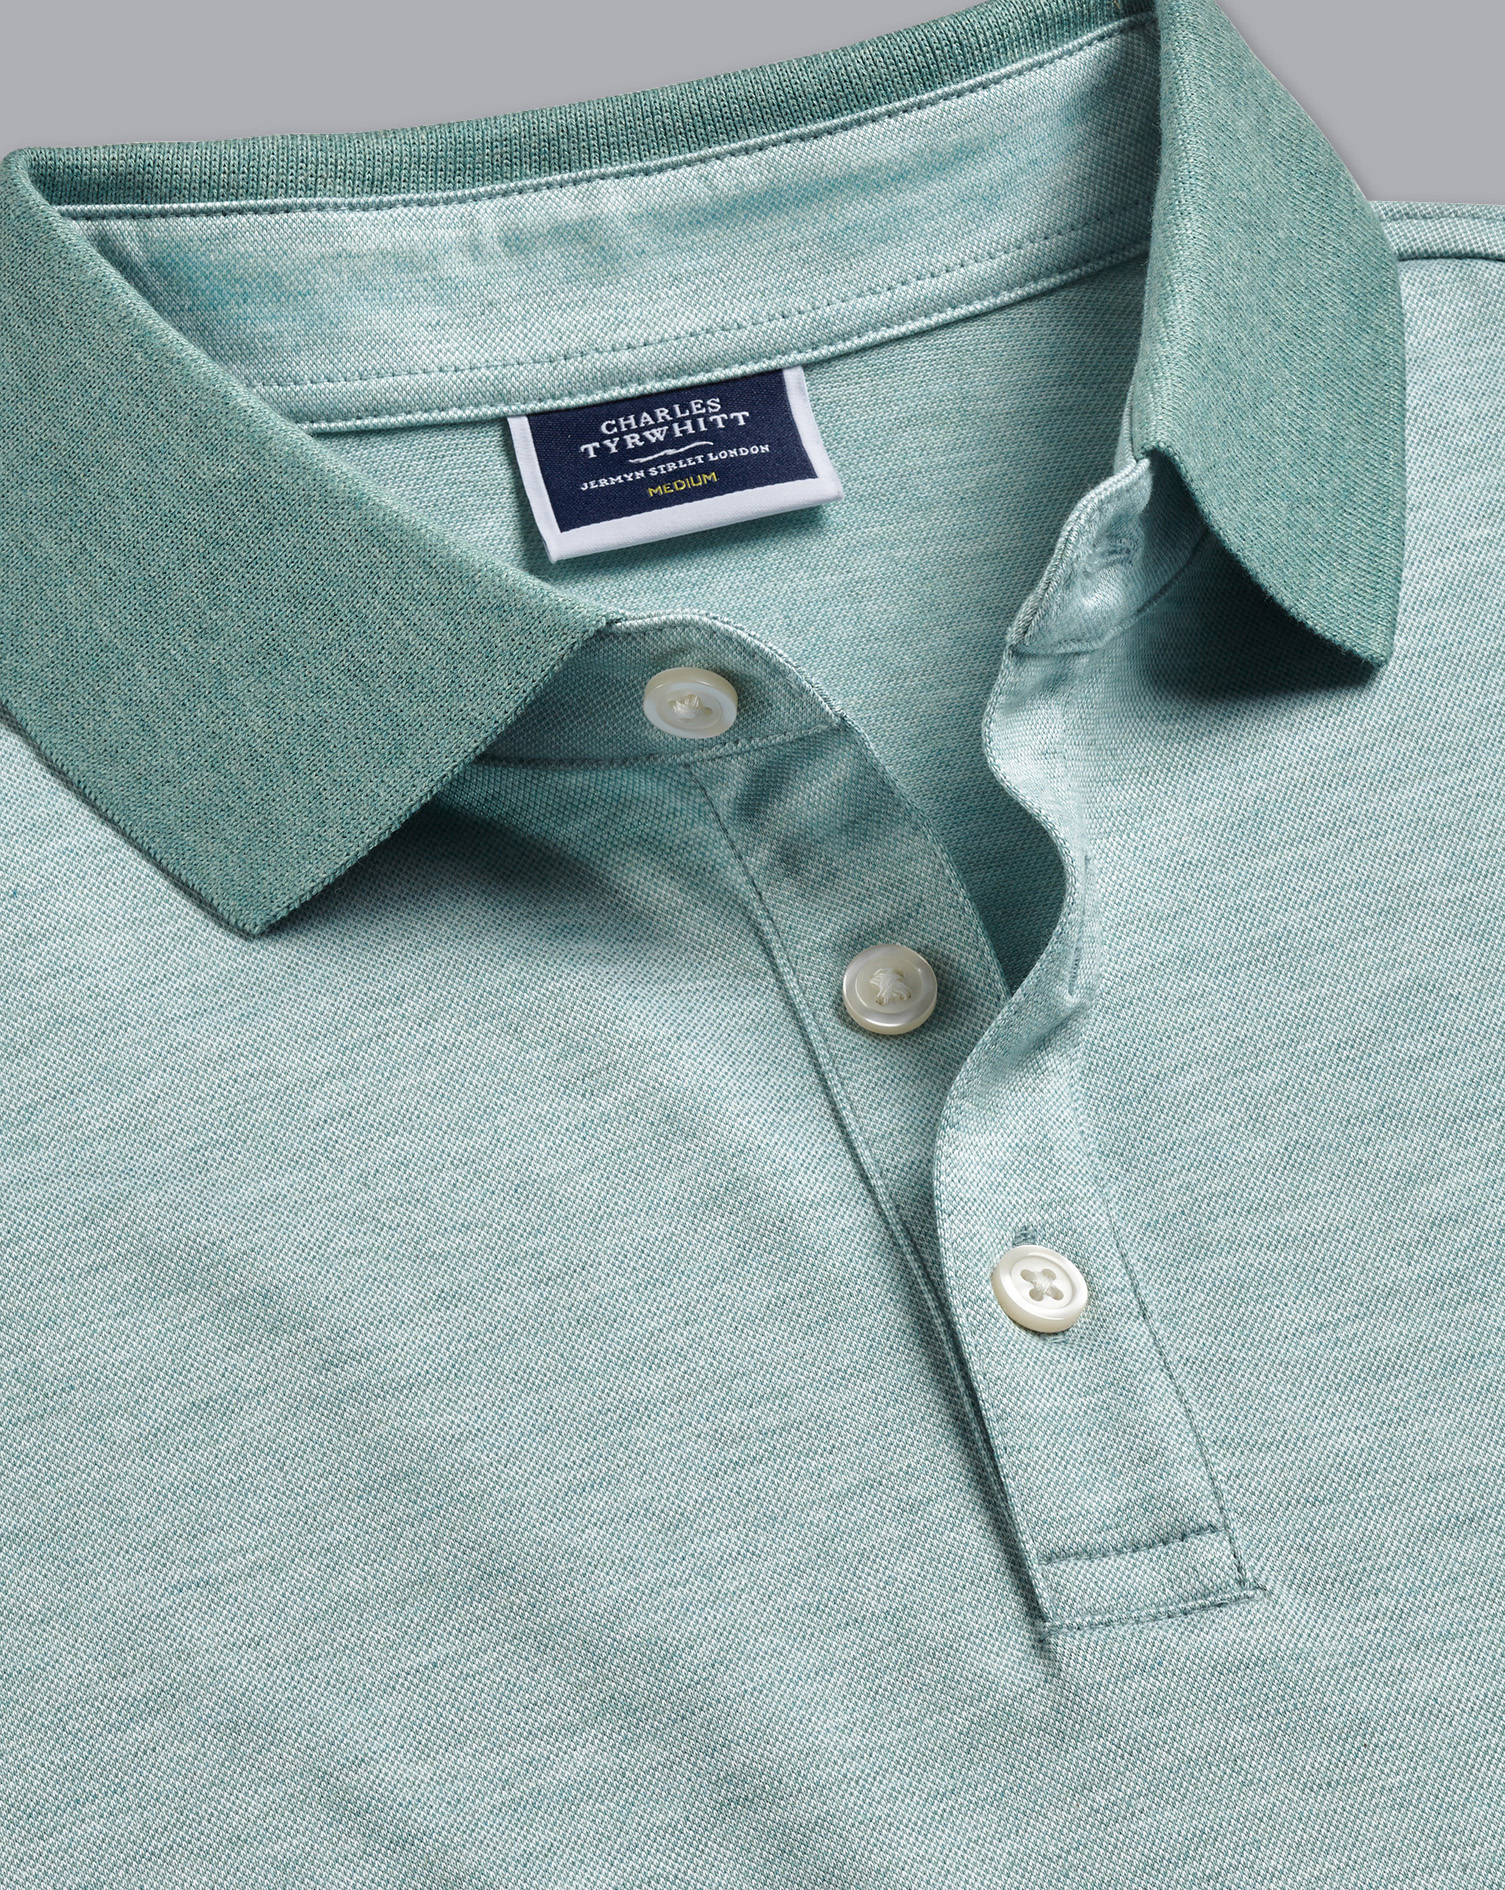 Men's Charles Tyrwhitt Birdseye Pique Polo Shirt - Teal Green Size XXXL Cotton
